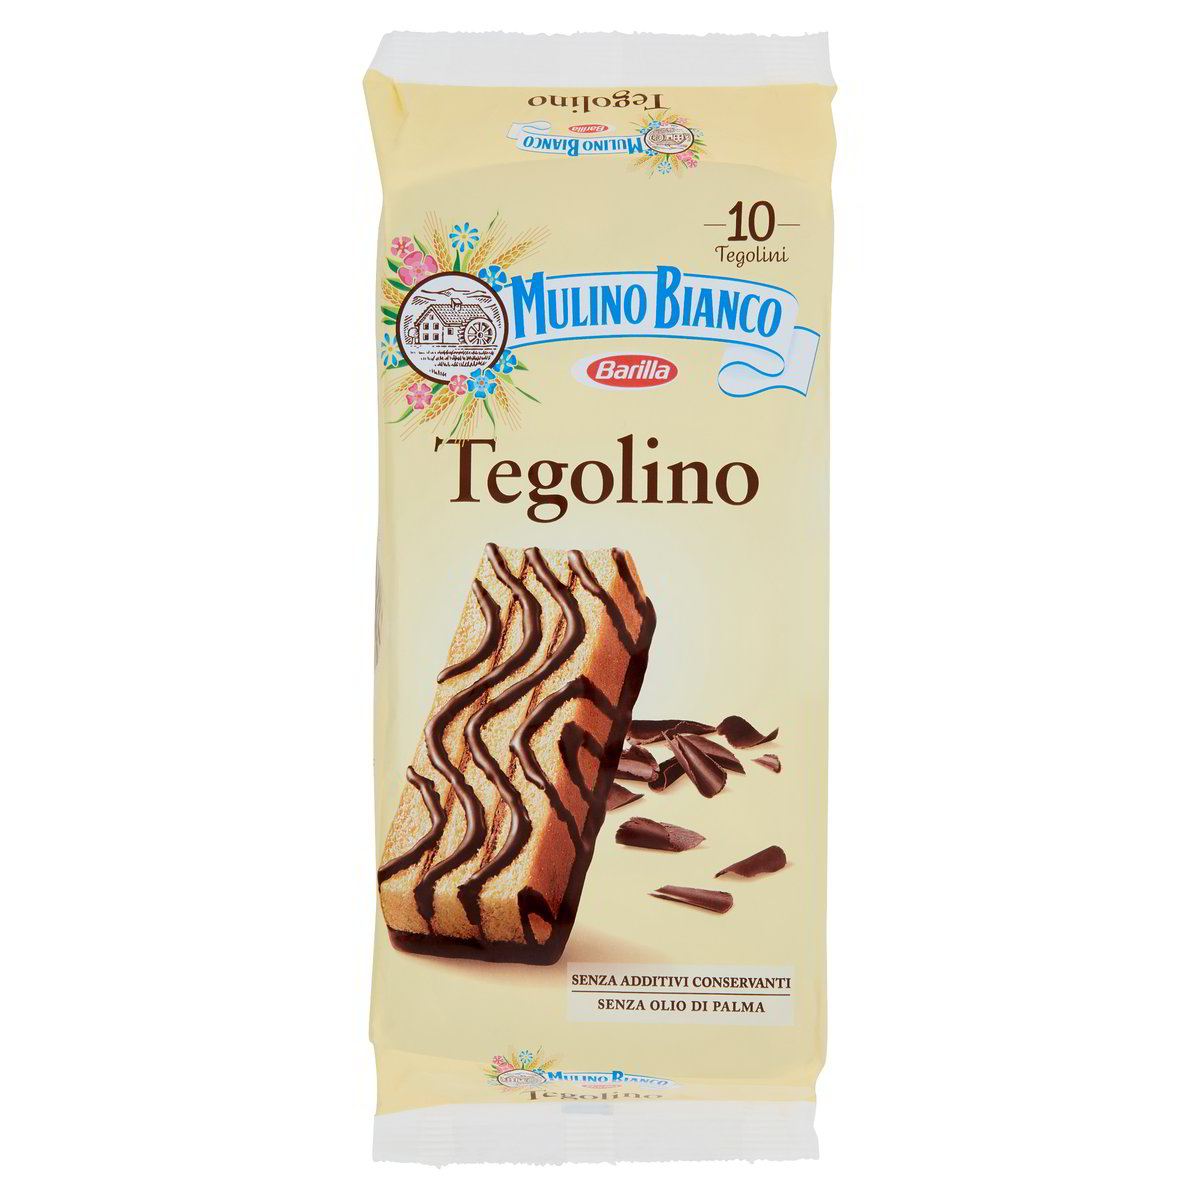 Tegolino